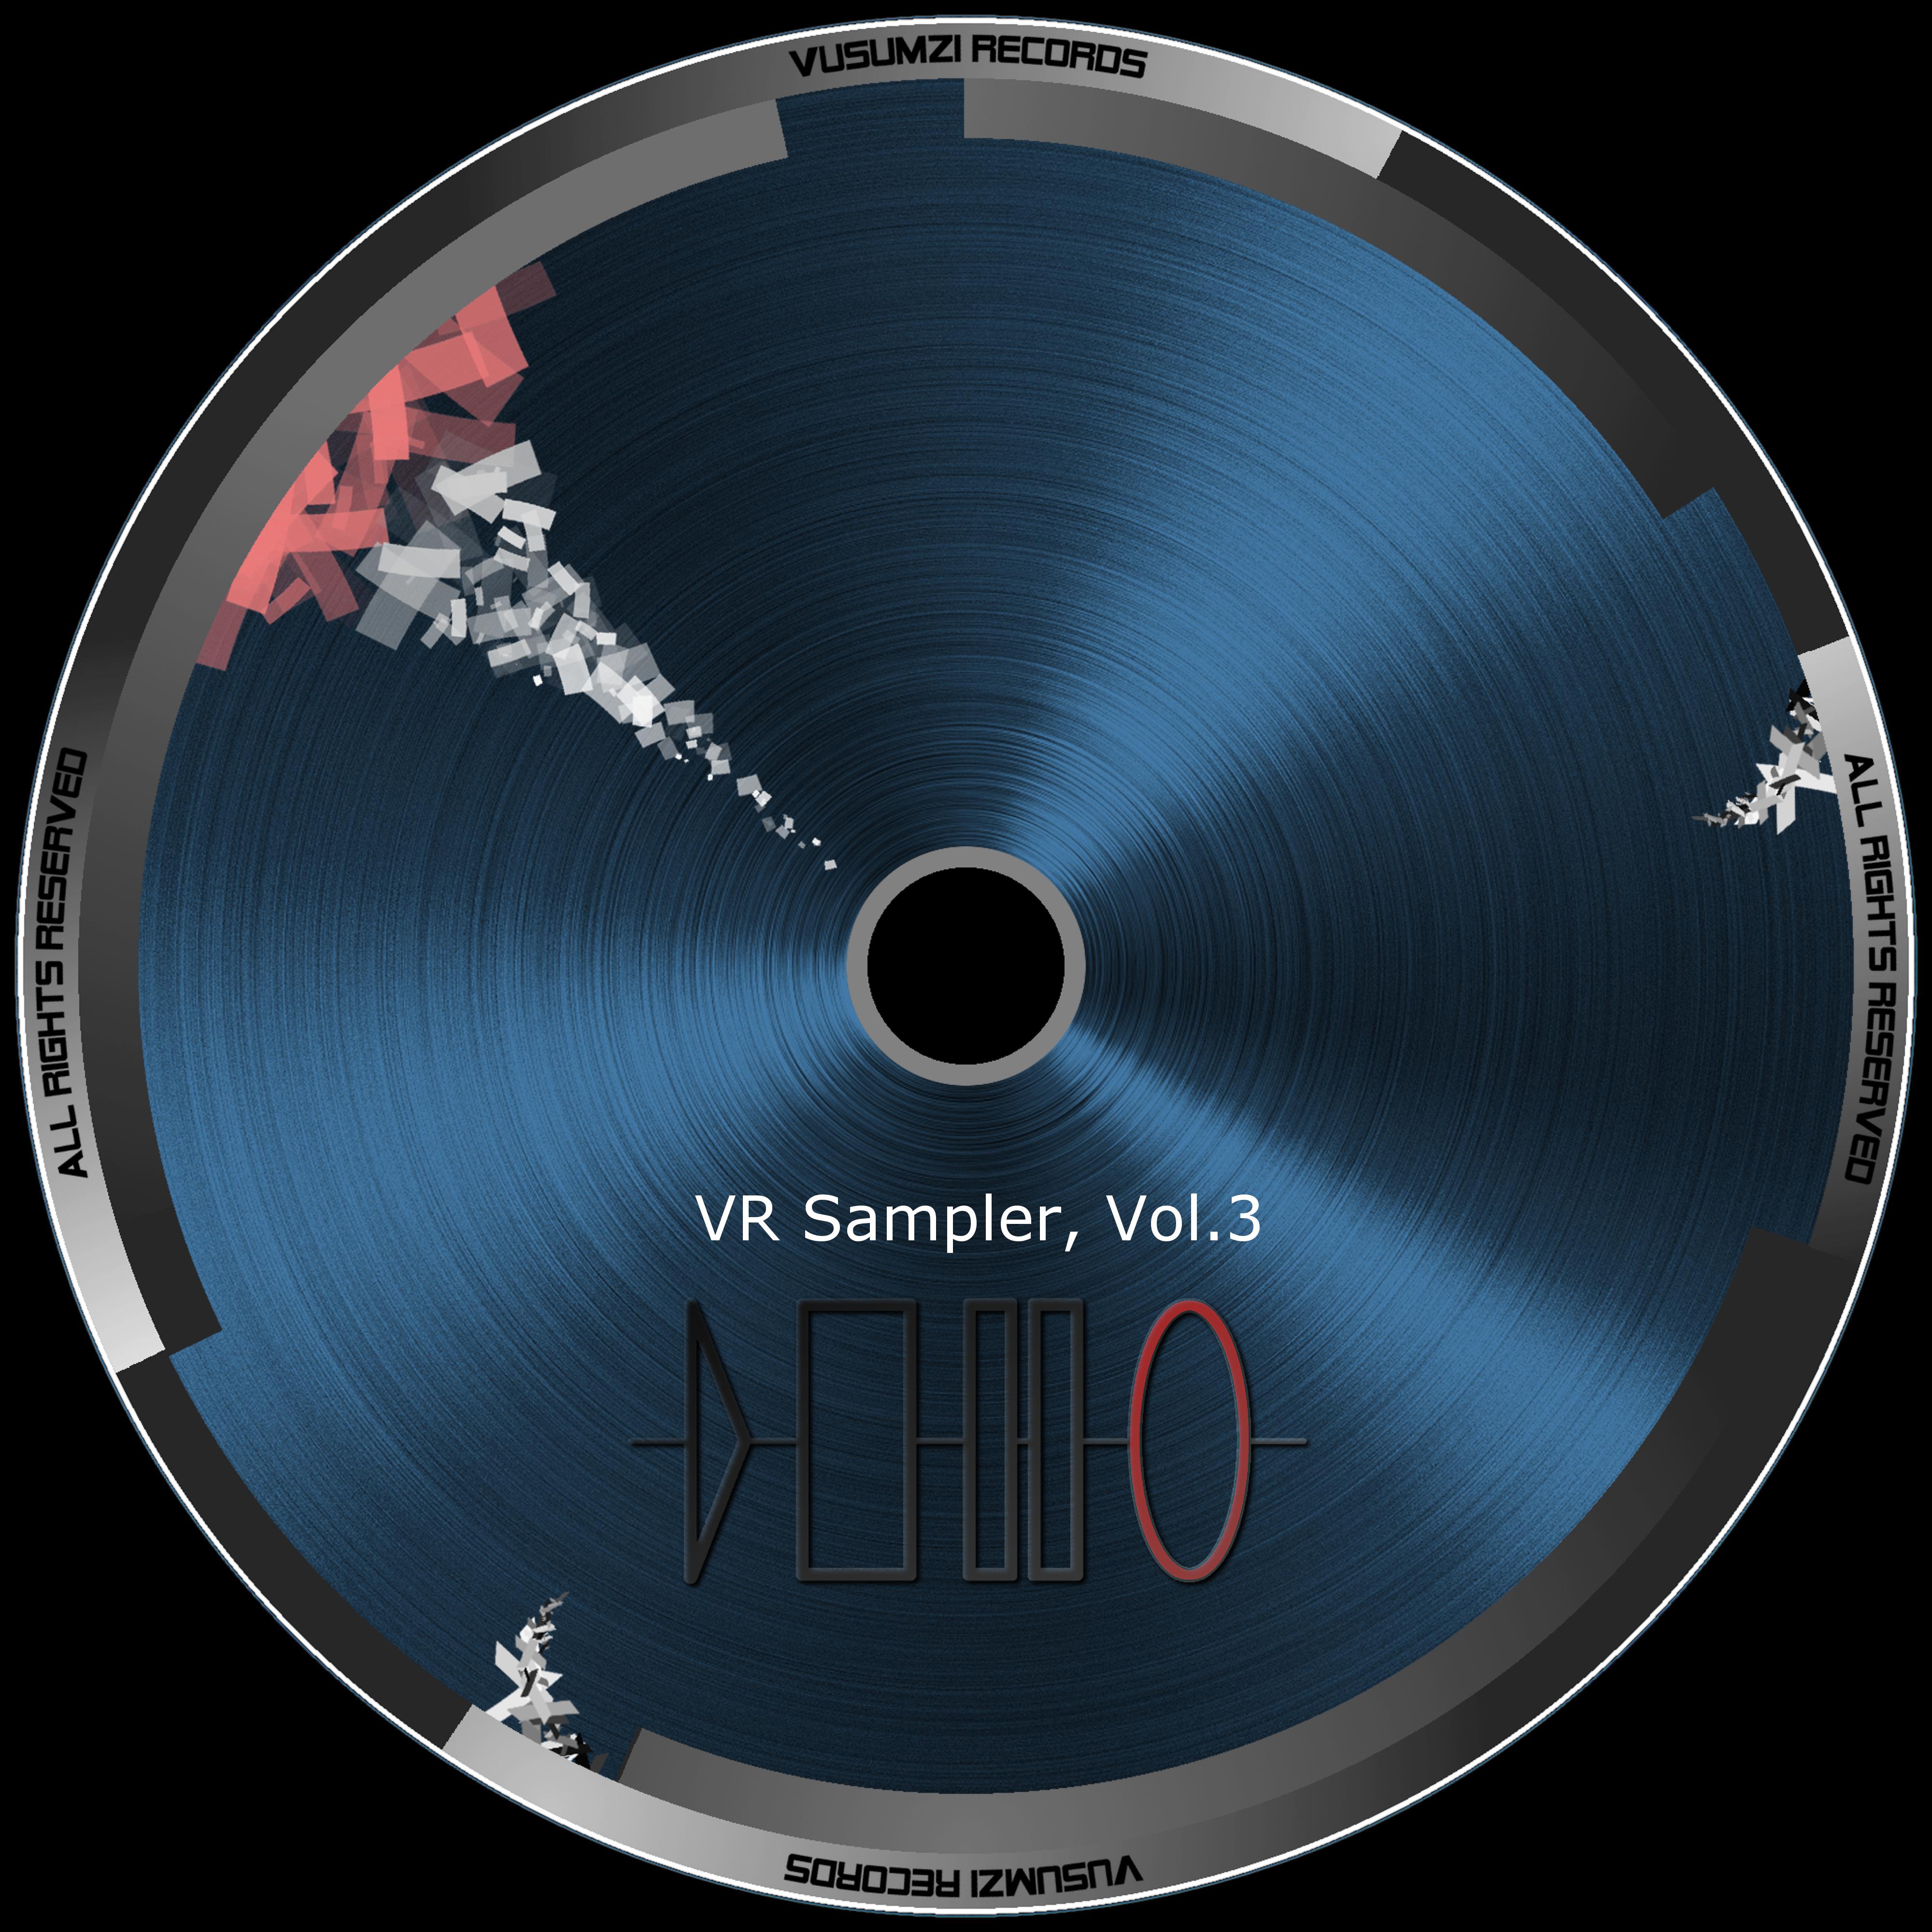 VR Sampler, Vol. 3